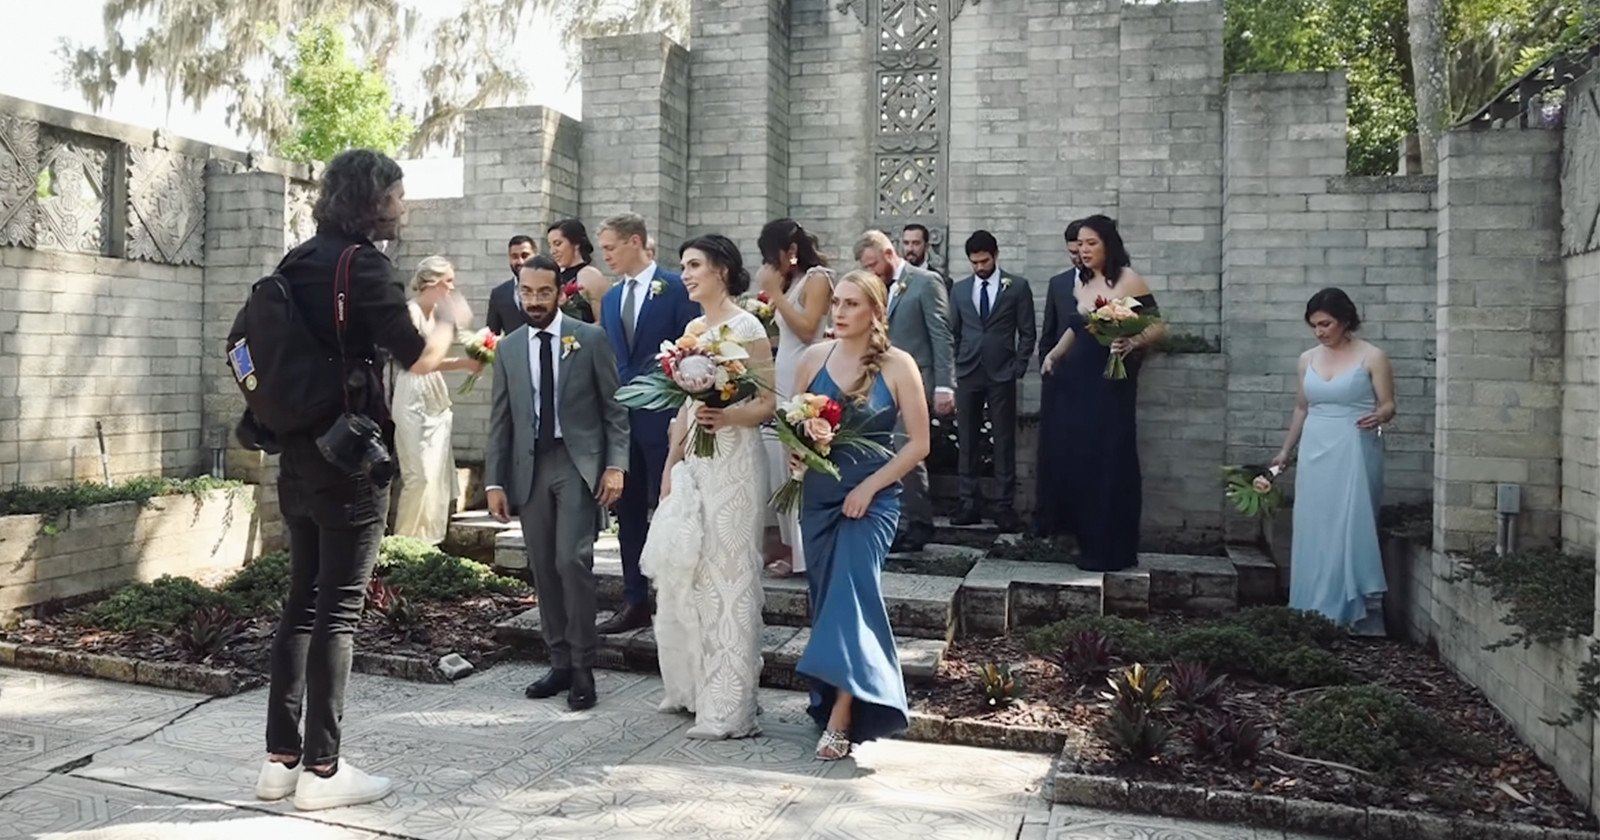 Follow Photographer Sam Hurd Through an Entire Wedding Shoot